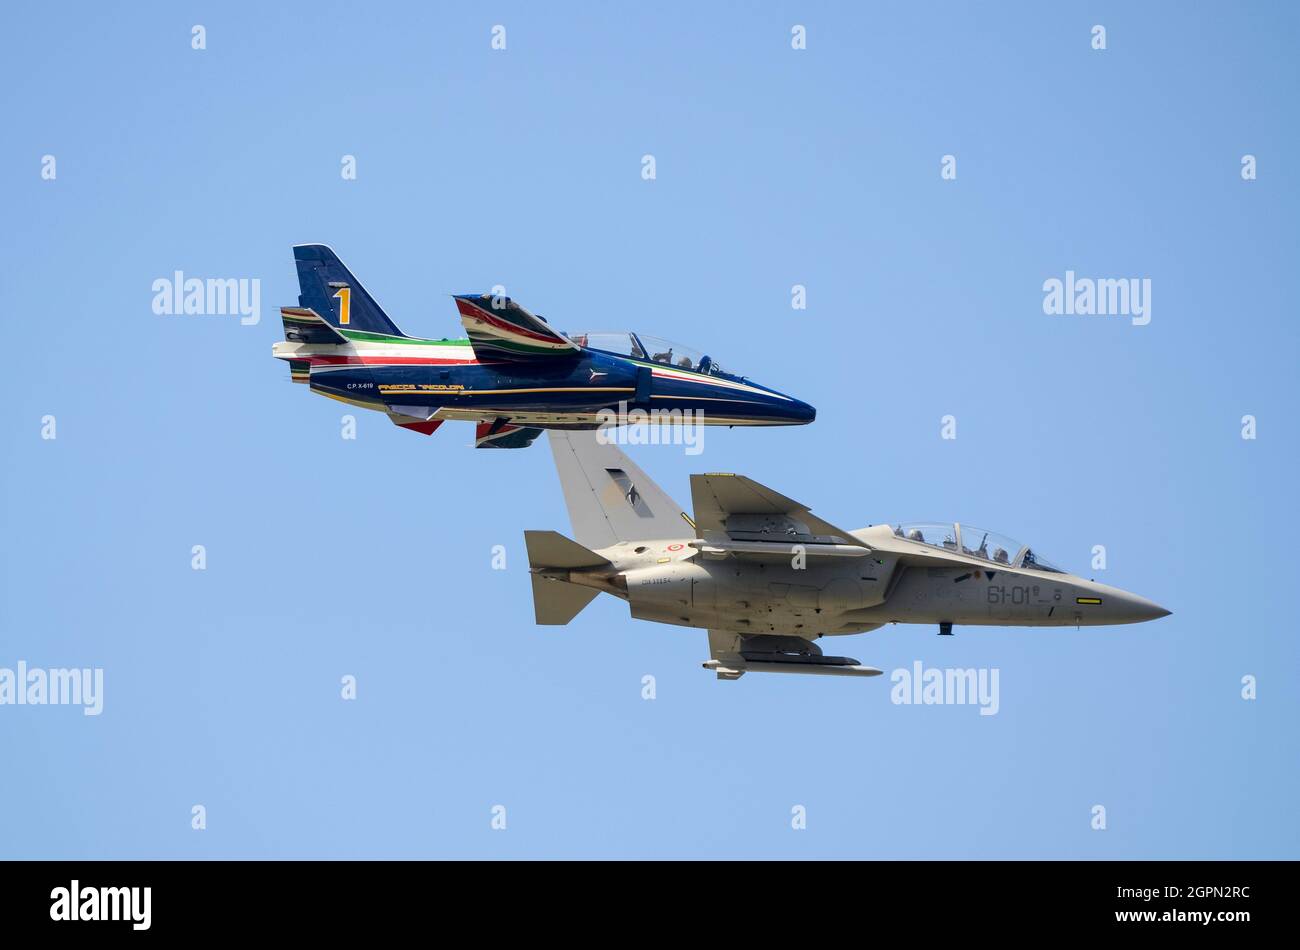 Aermacchi M 345 advanced military jet trainer plane in Frecce Tricolori display team colours as number 1, with Alenia Aermacchi M 346 Master. Scale Stock Photo